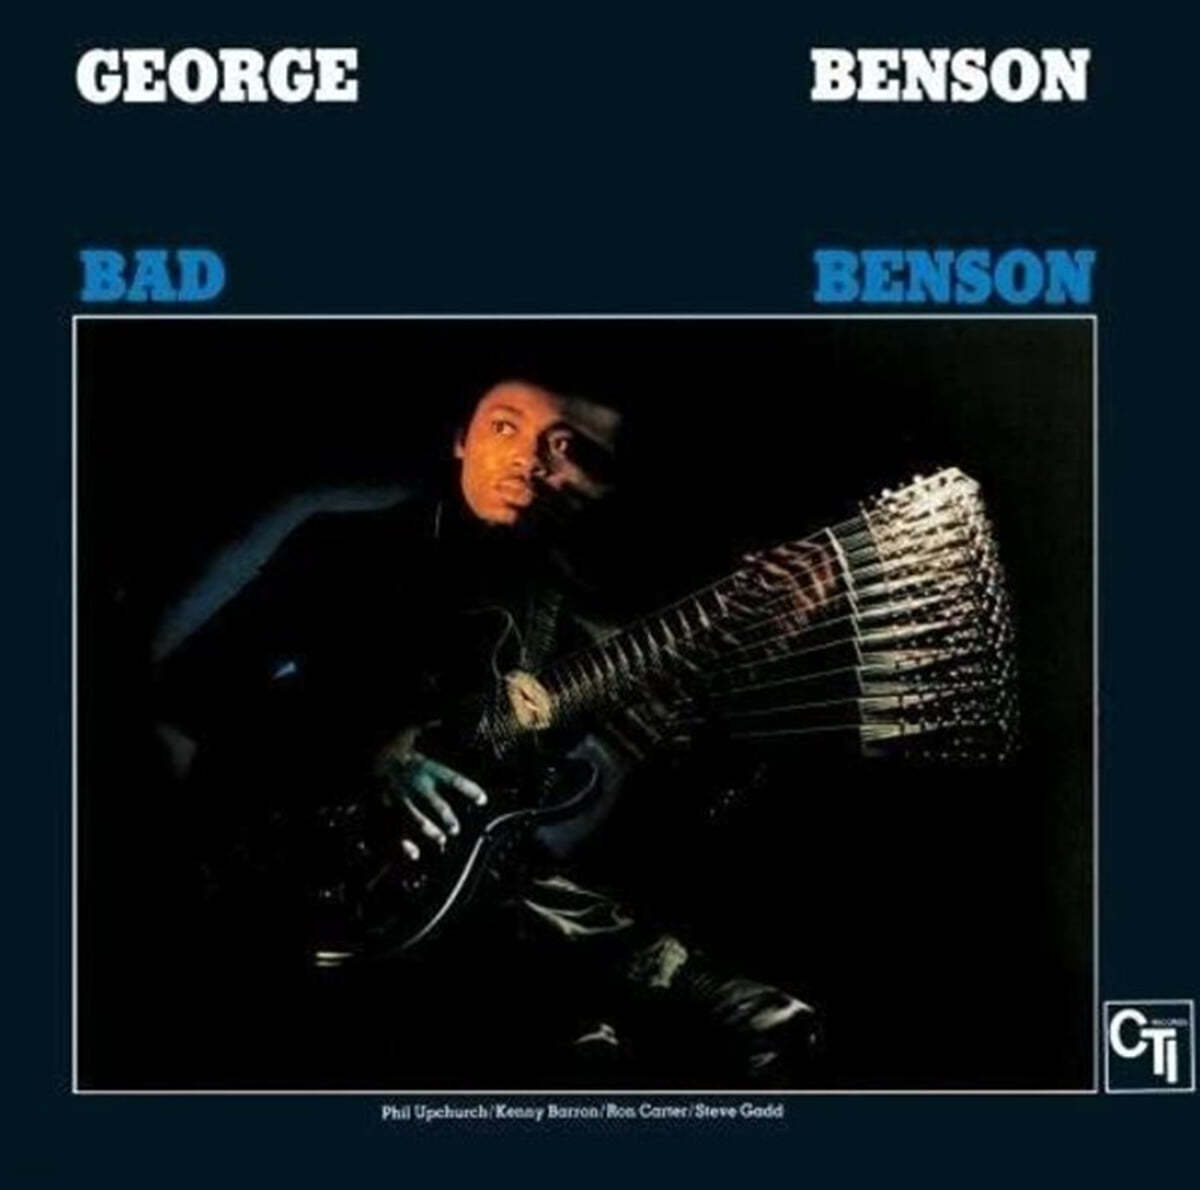 George Benson (조지 벤슨) - Bad Benson 